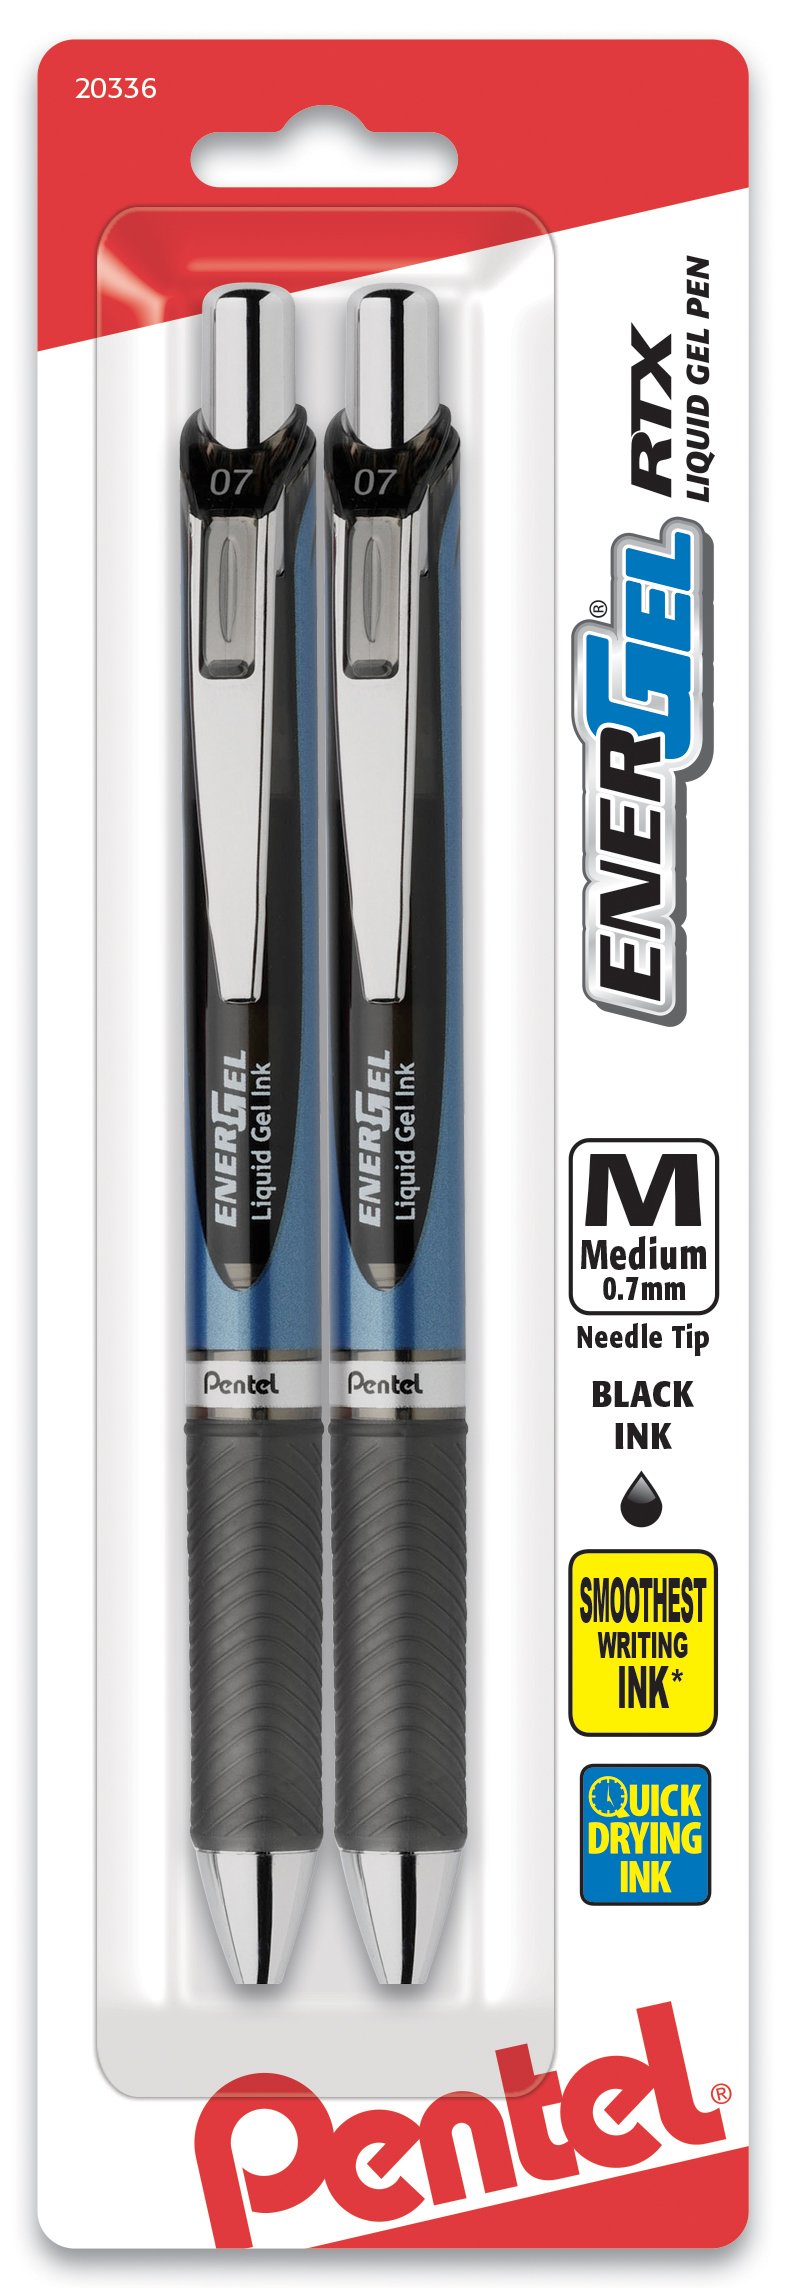 Pentel EnerGel Deluxe RTX Retractable Liquid Gel Pen, 0.7mm, Needle Tip, Black Ink, 2 pack (BLN77BP2A)